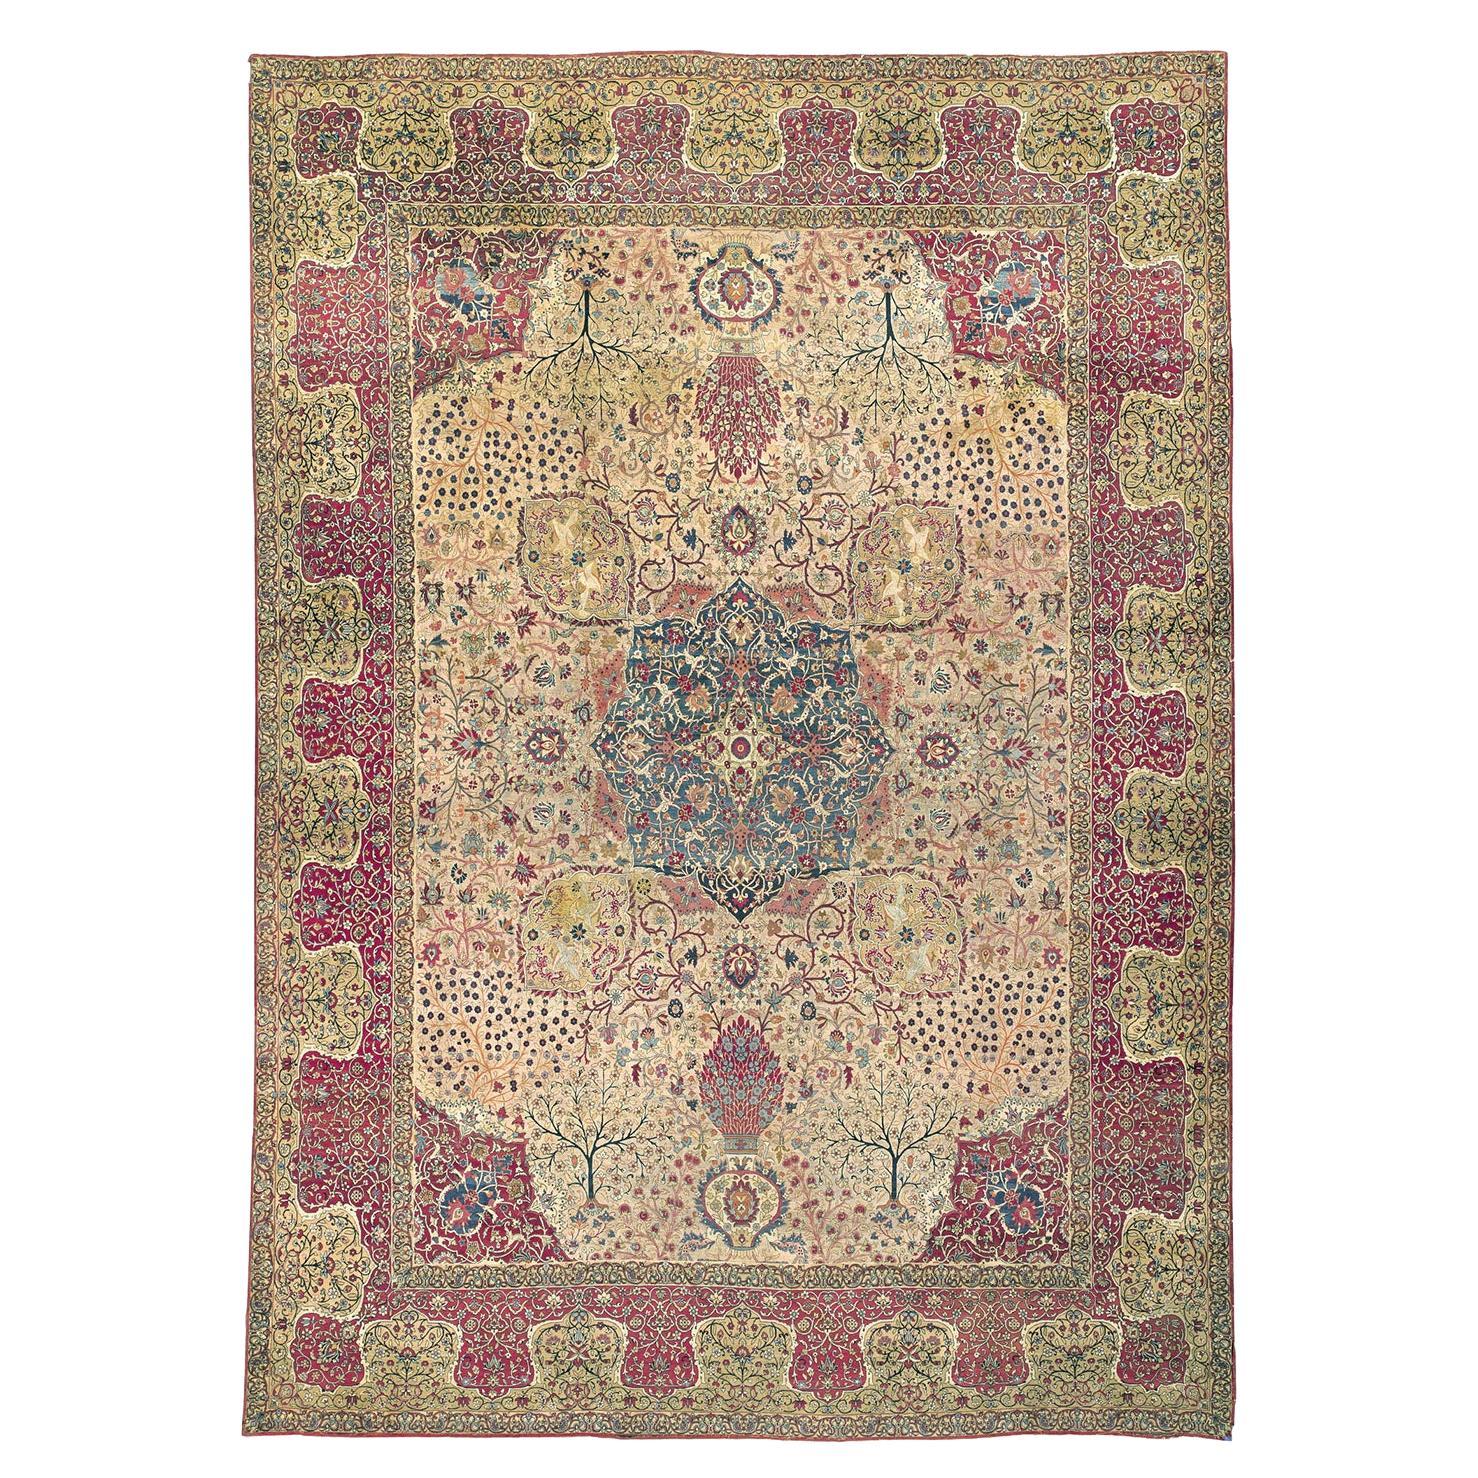 Antique Oversize Persian Kerman Rug Carpet, 16'4 x 21'4 For Sale